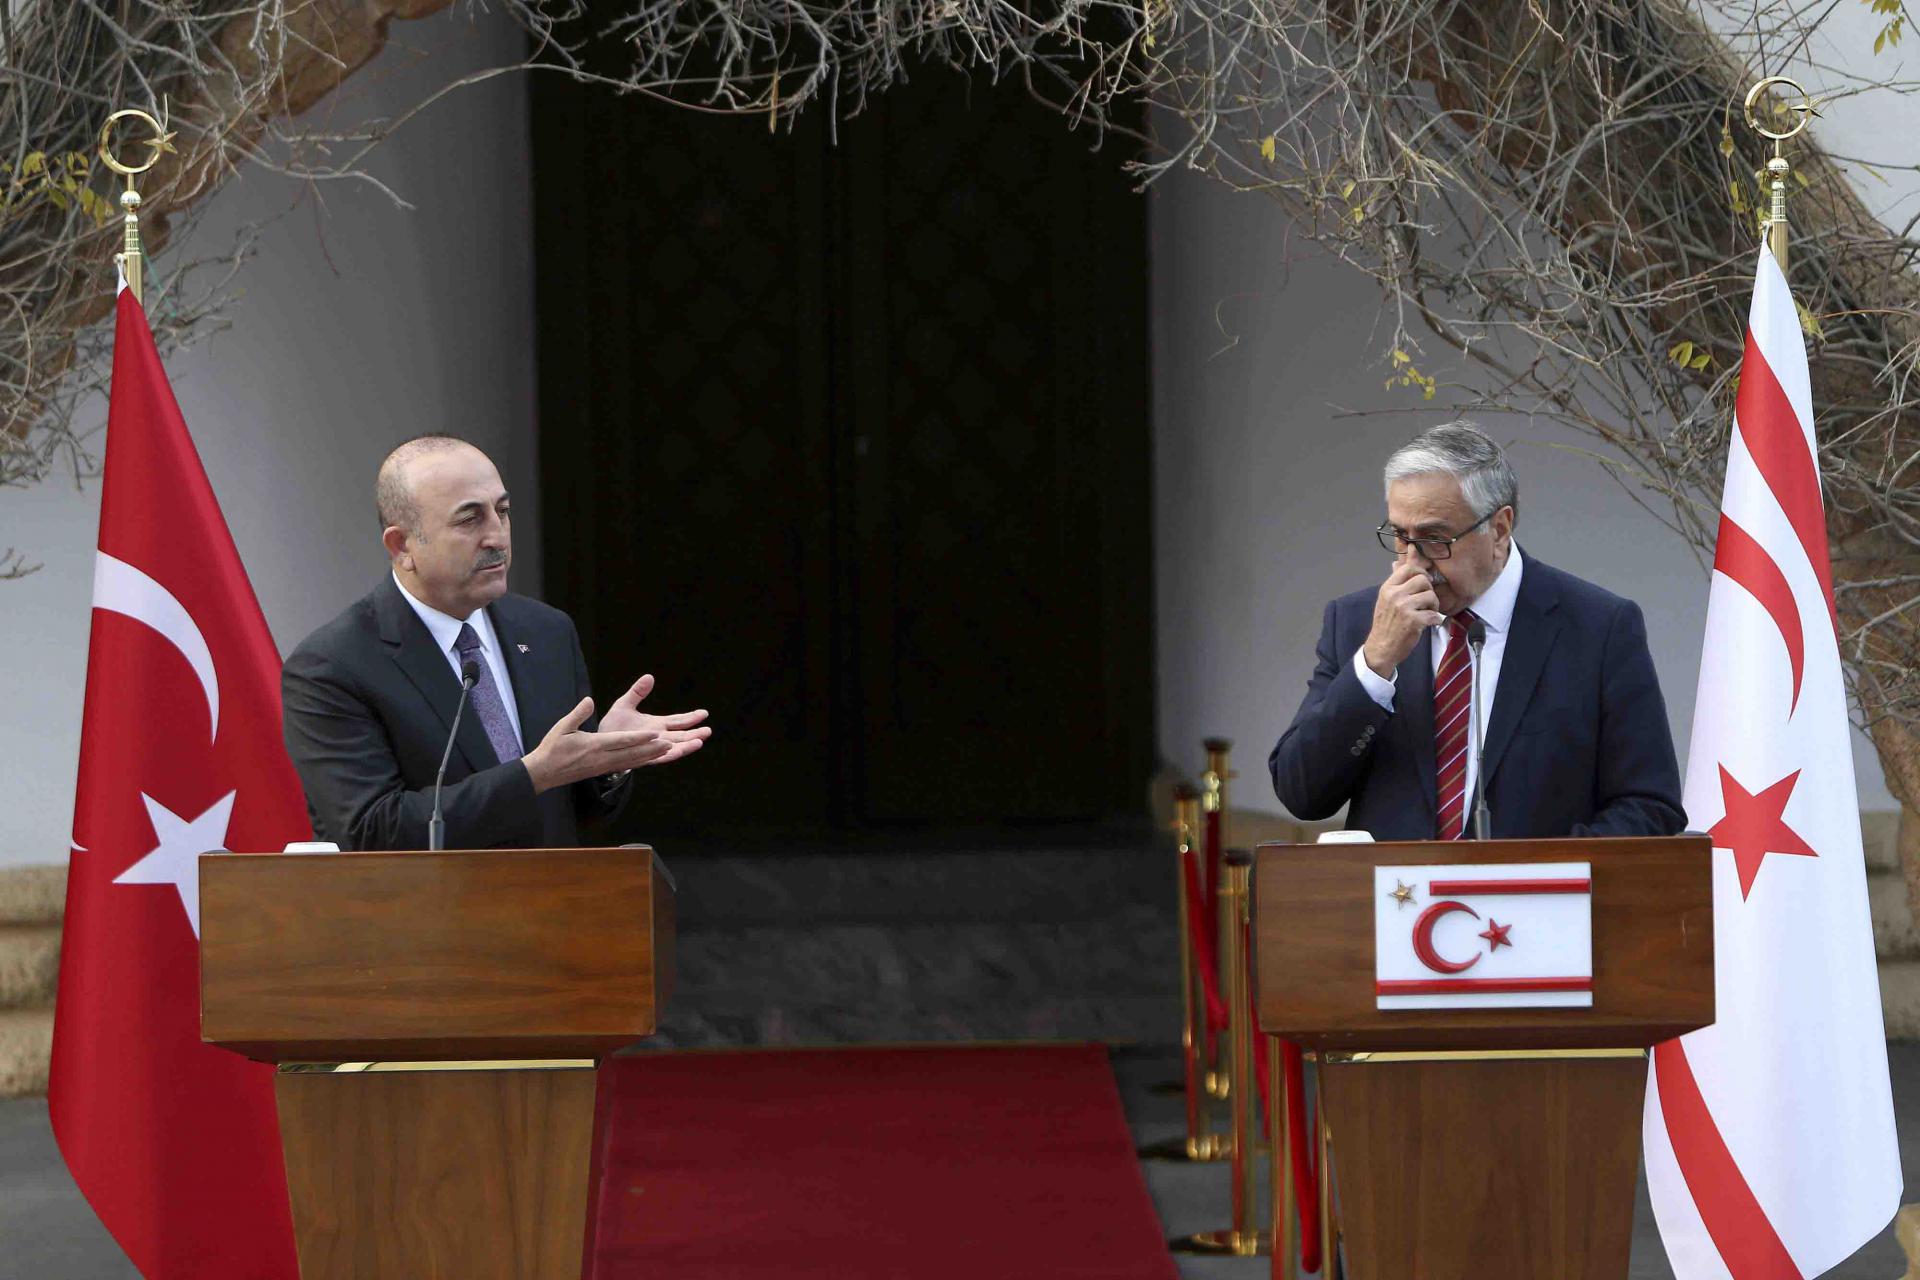 Cyprus President Nicos Anastasiades has slammed Turkey's drilling bid inside Cyprus waters as a "new invasion"